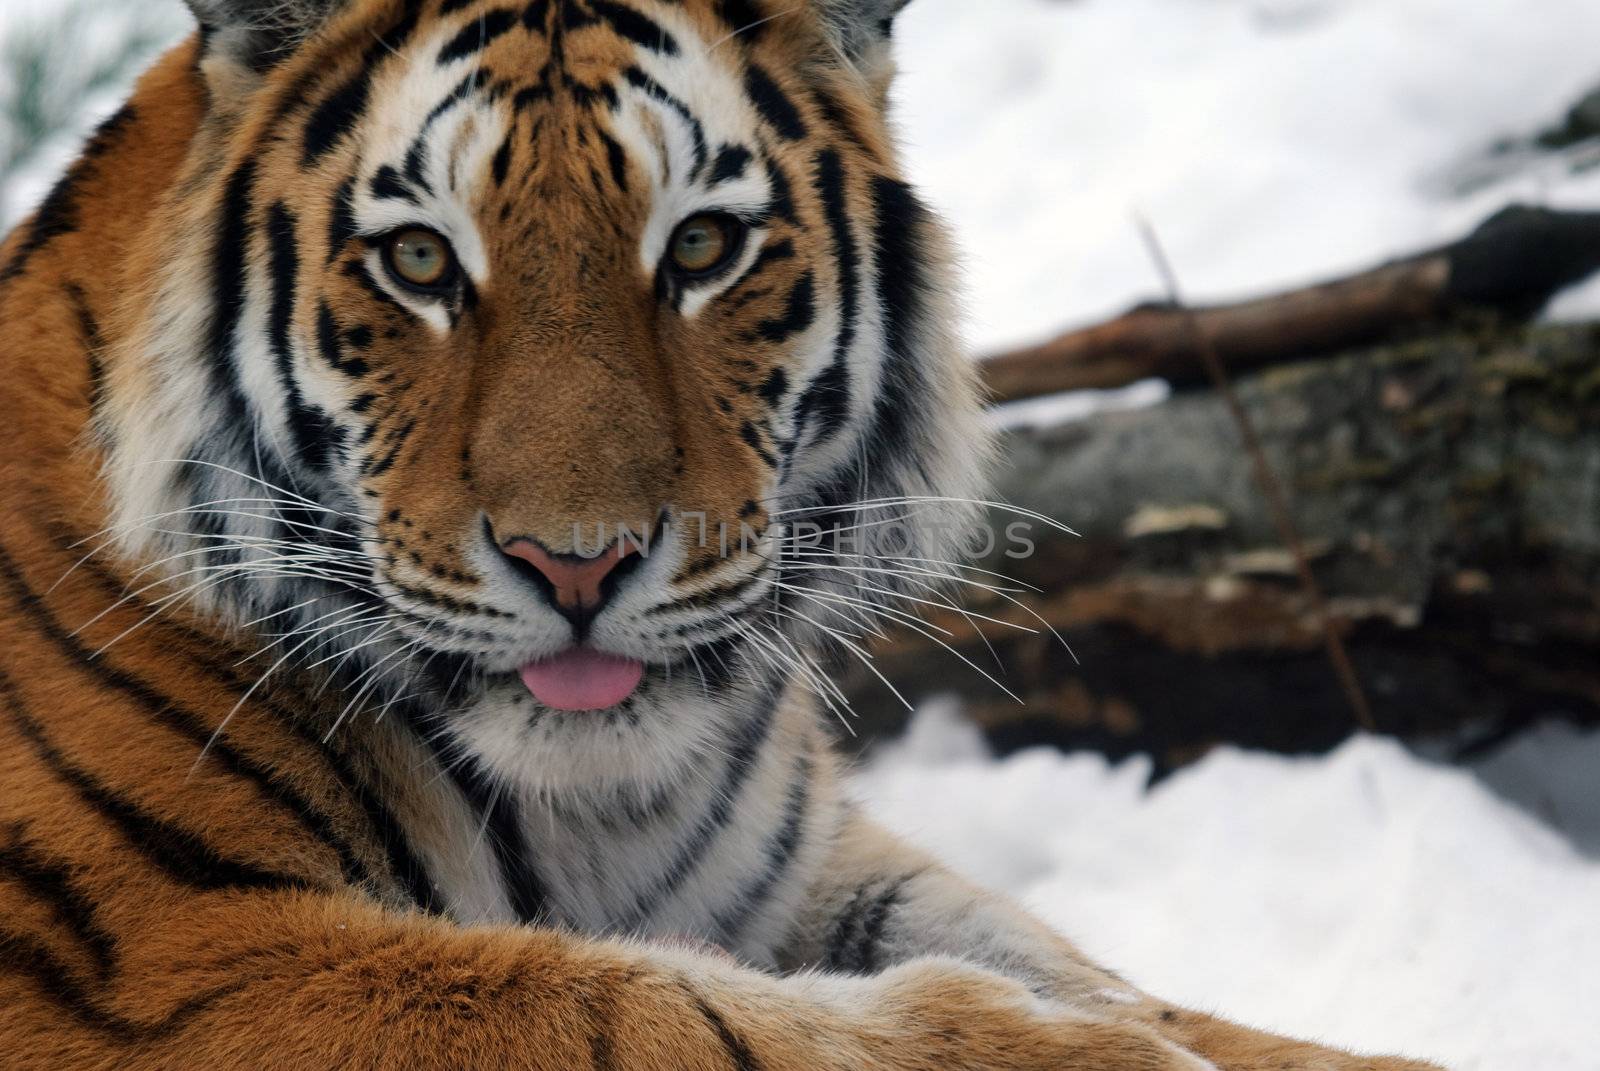 Tiger by nialat